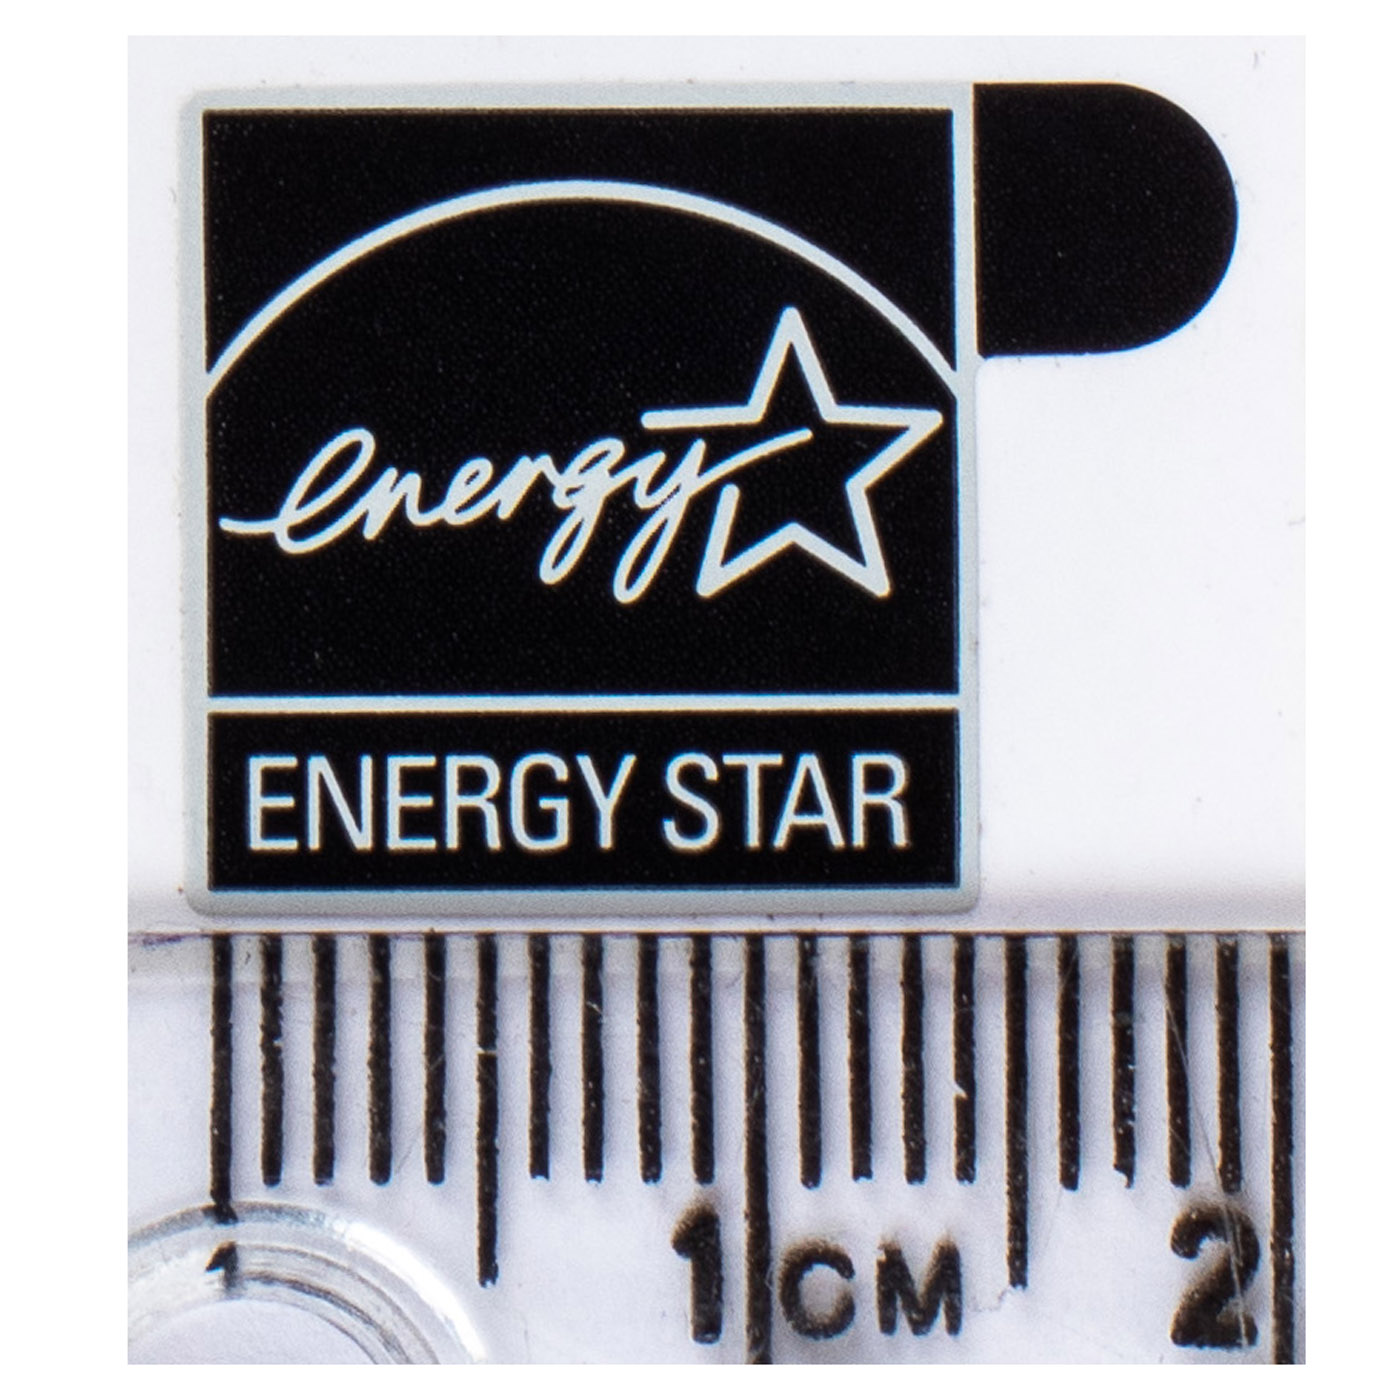 Naklejka Energy Star black 15 x 16 mm